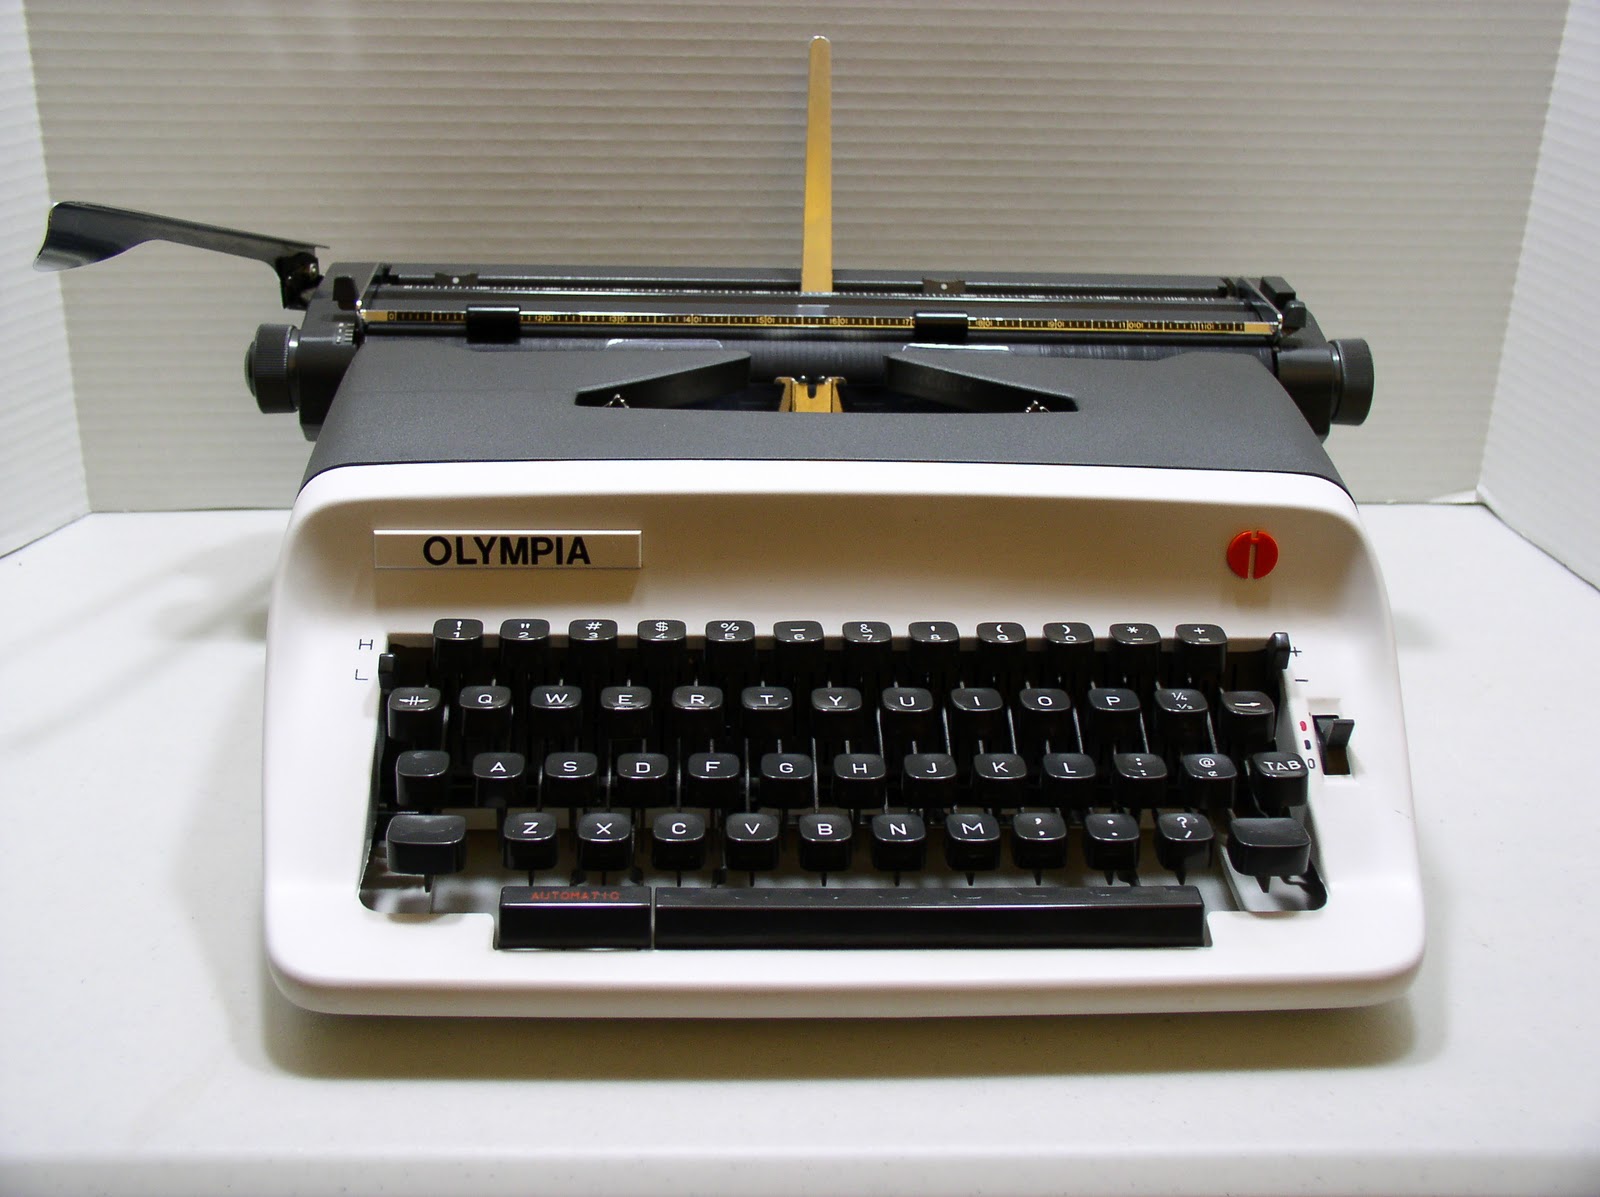 Fountain Pens & Typewriters: My Japanese Olympia Typewriter